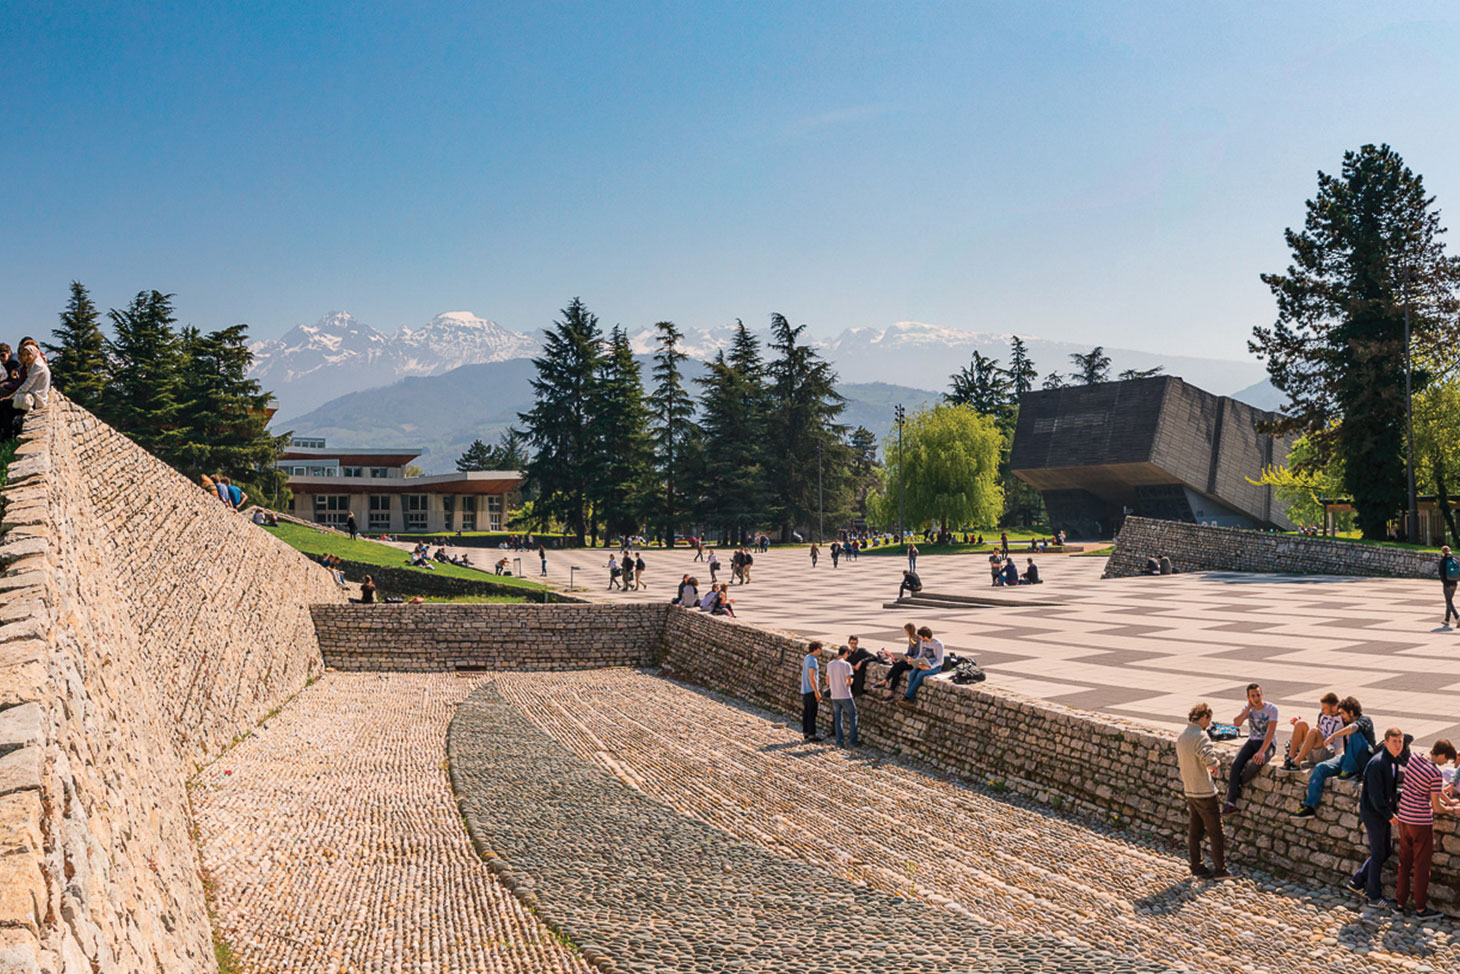 Le campus universitaire de Grenoble